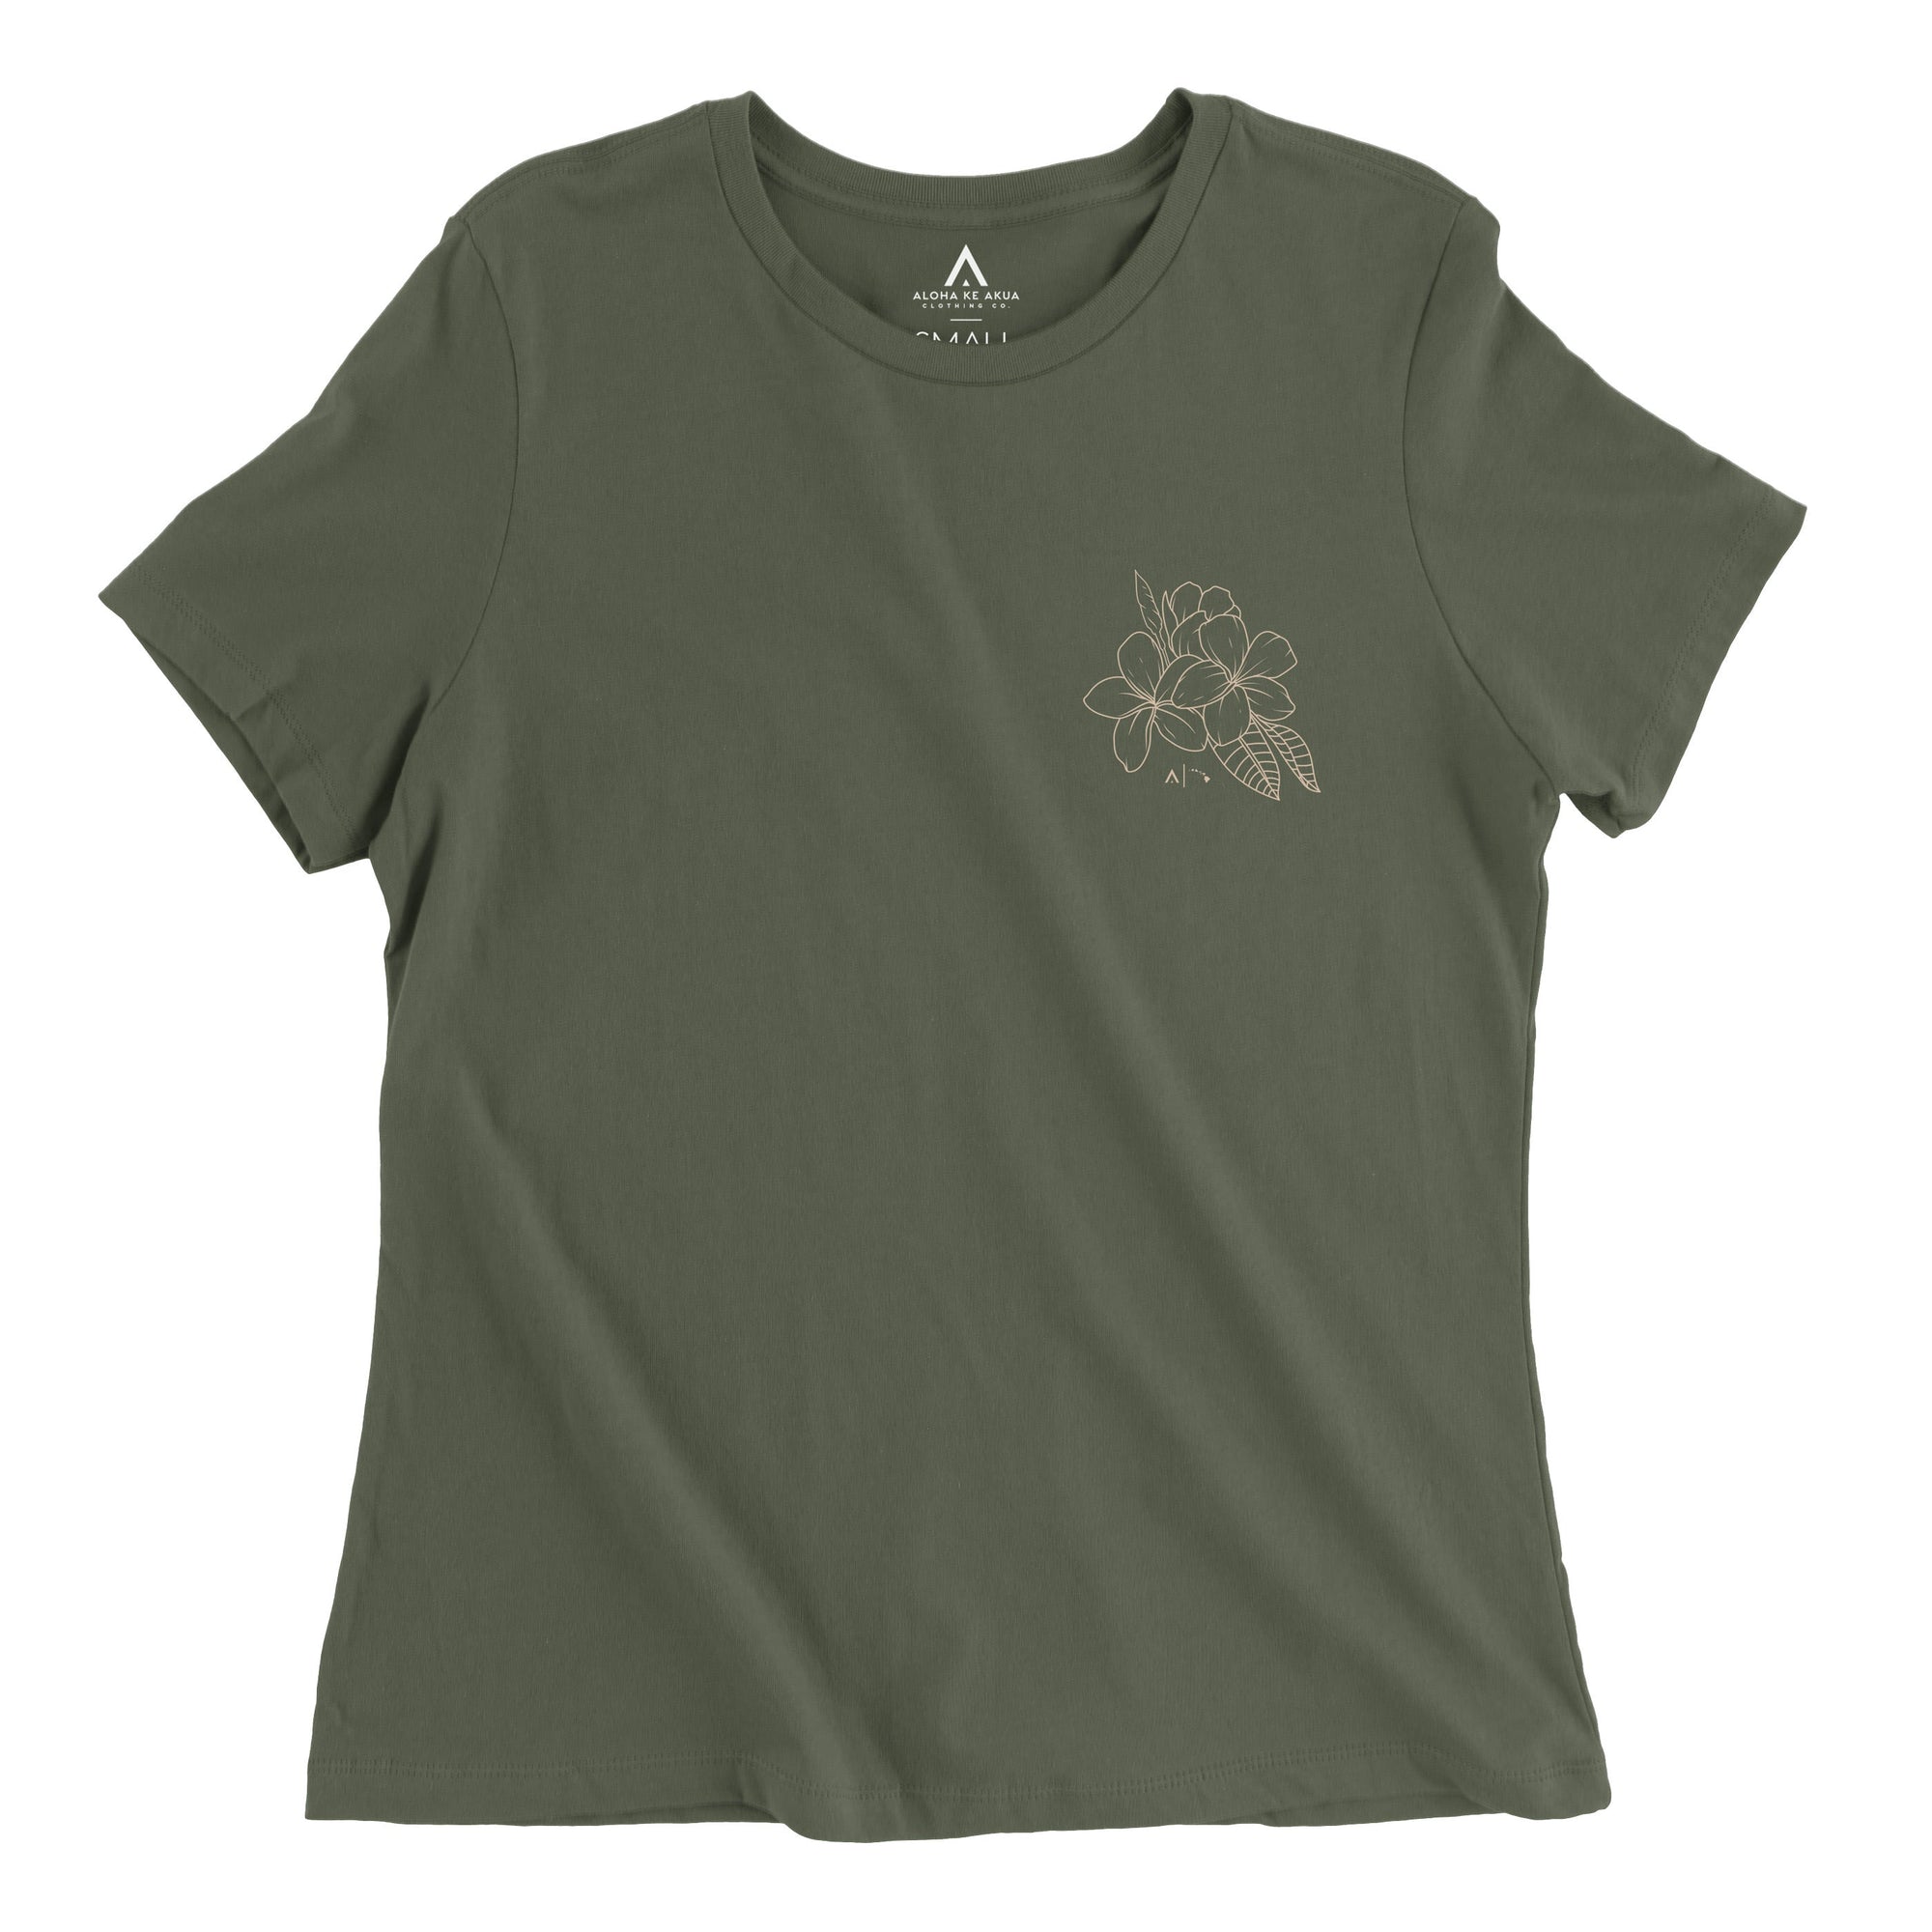 Pop-Up Mākeke - Aloha Ke Akua Clothing - Melia Women's Short Sleeve T-Shirt -  Military Green - Front View